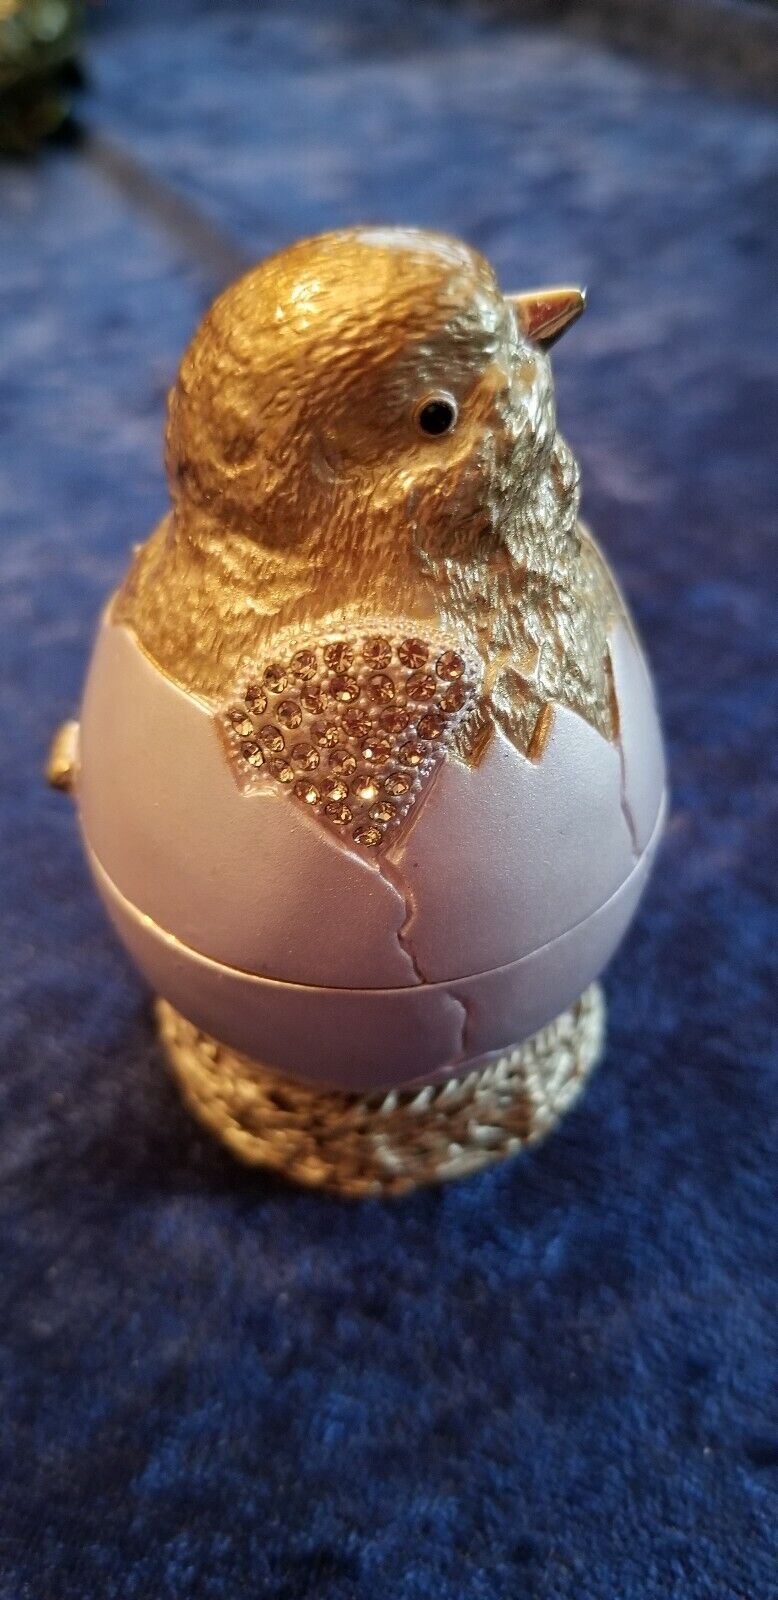 Signed Rucinni Hatching Chick Trinket Box Swarovski Crystal's On Body